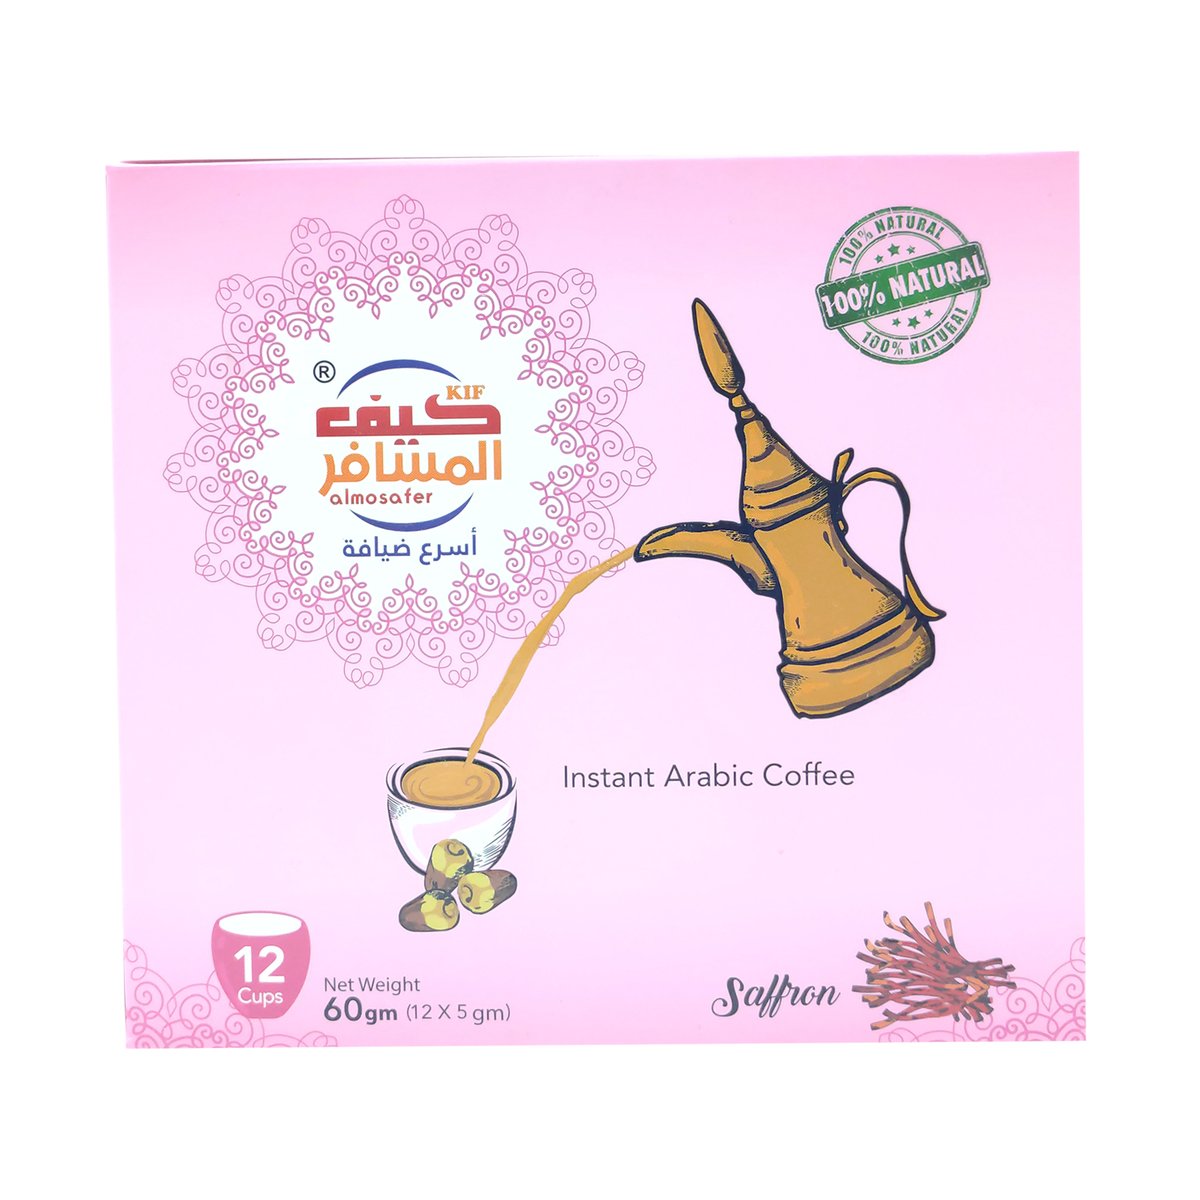 Kif Almosafer Instant Arabic Coffee Saffron 12 x 5 g